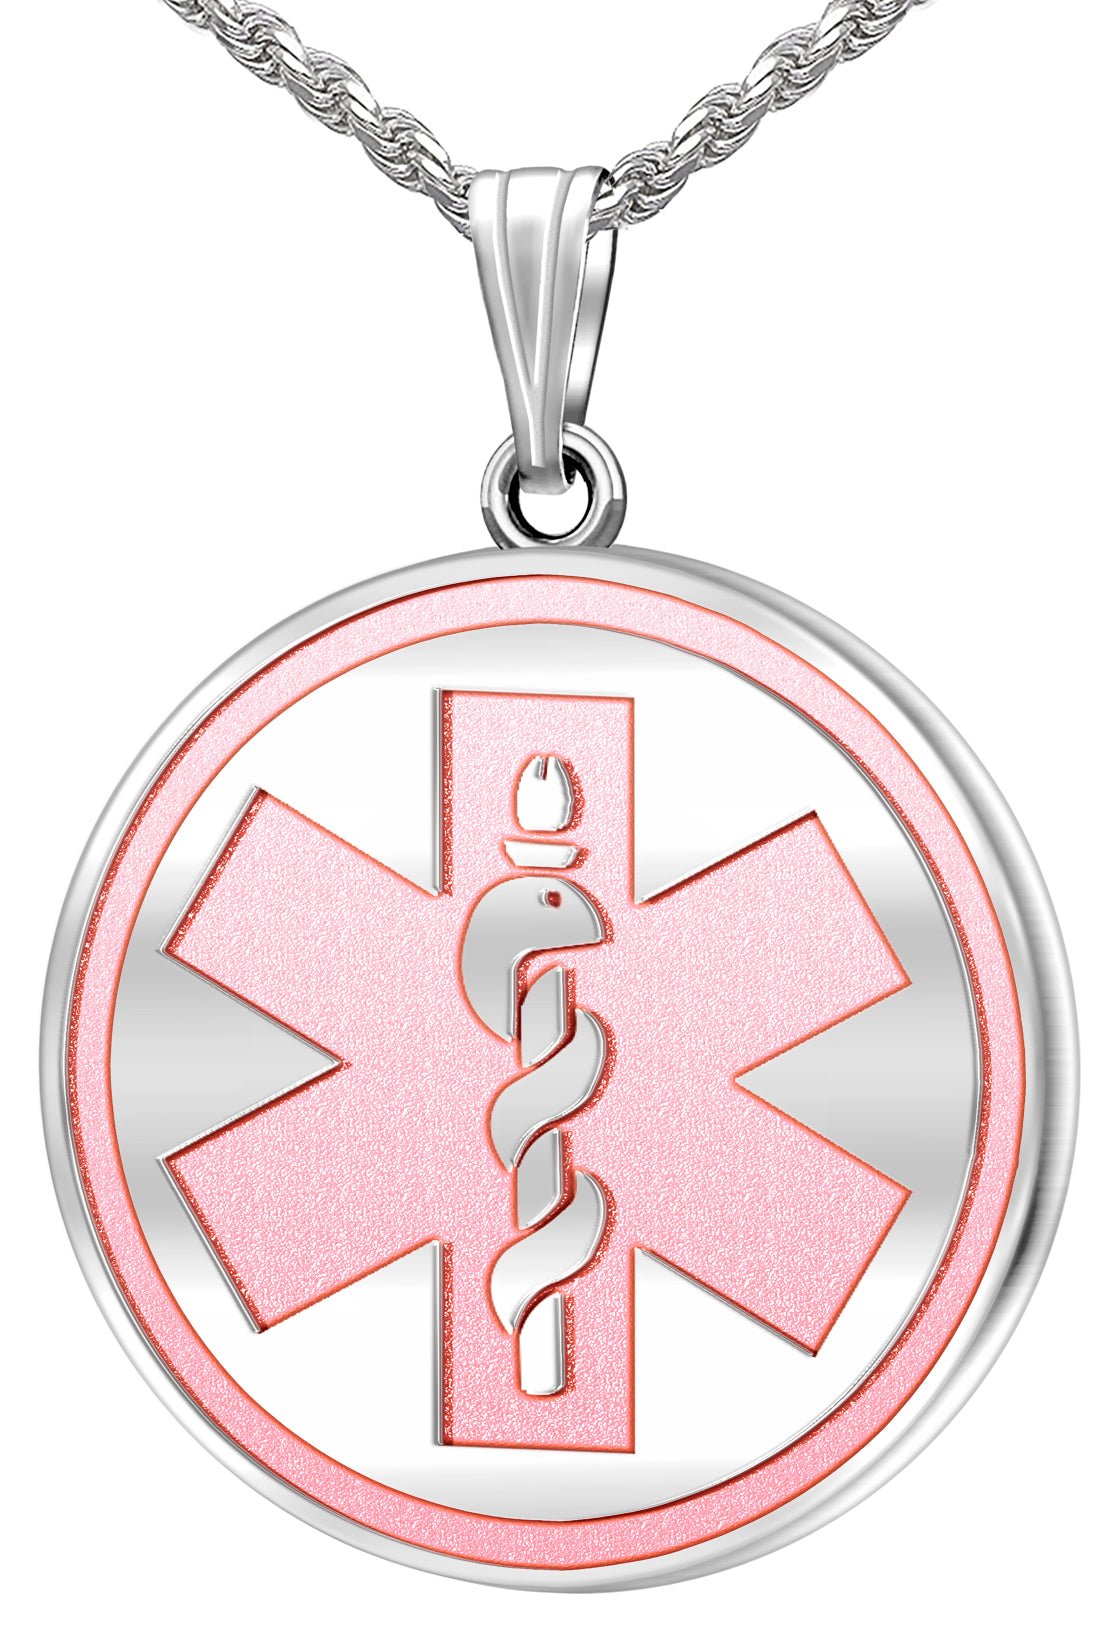 Men's 925 Sterling Silver Engravable Medical ID Medal Pendant Necklace, 5 Color Enamel Options - US Jewels